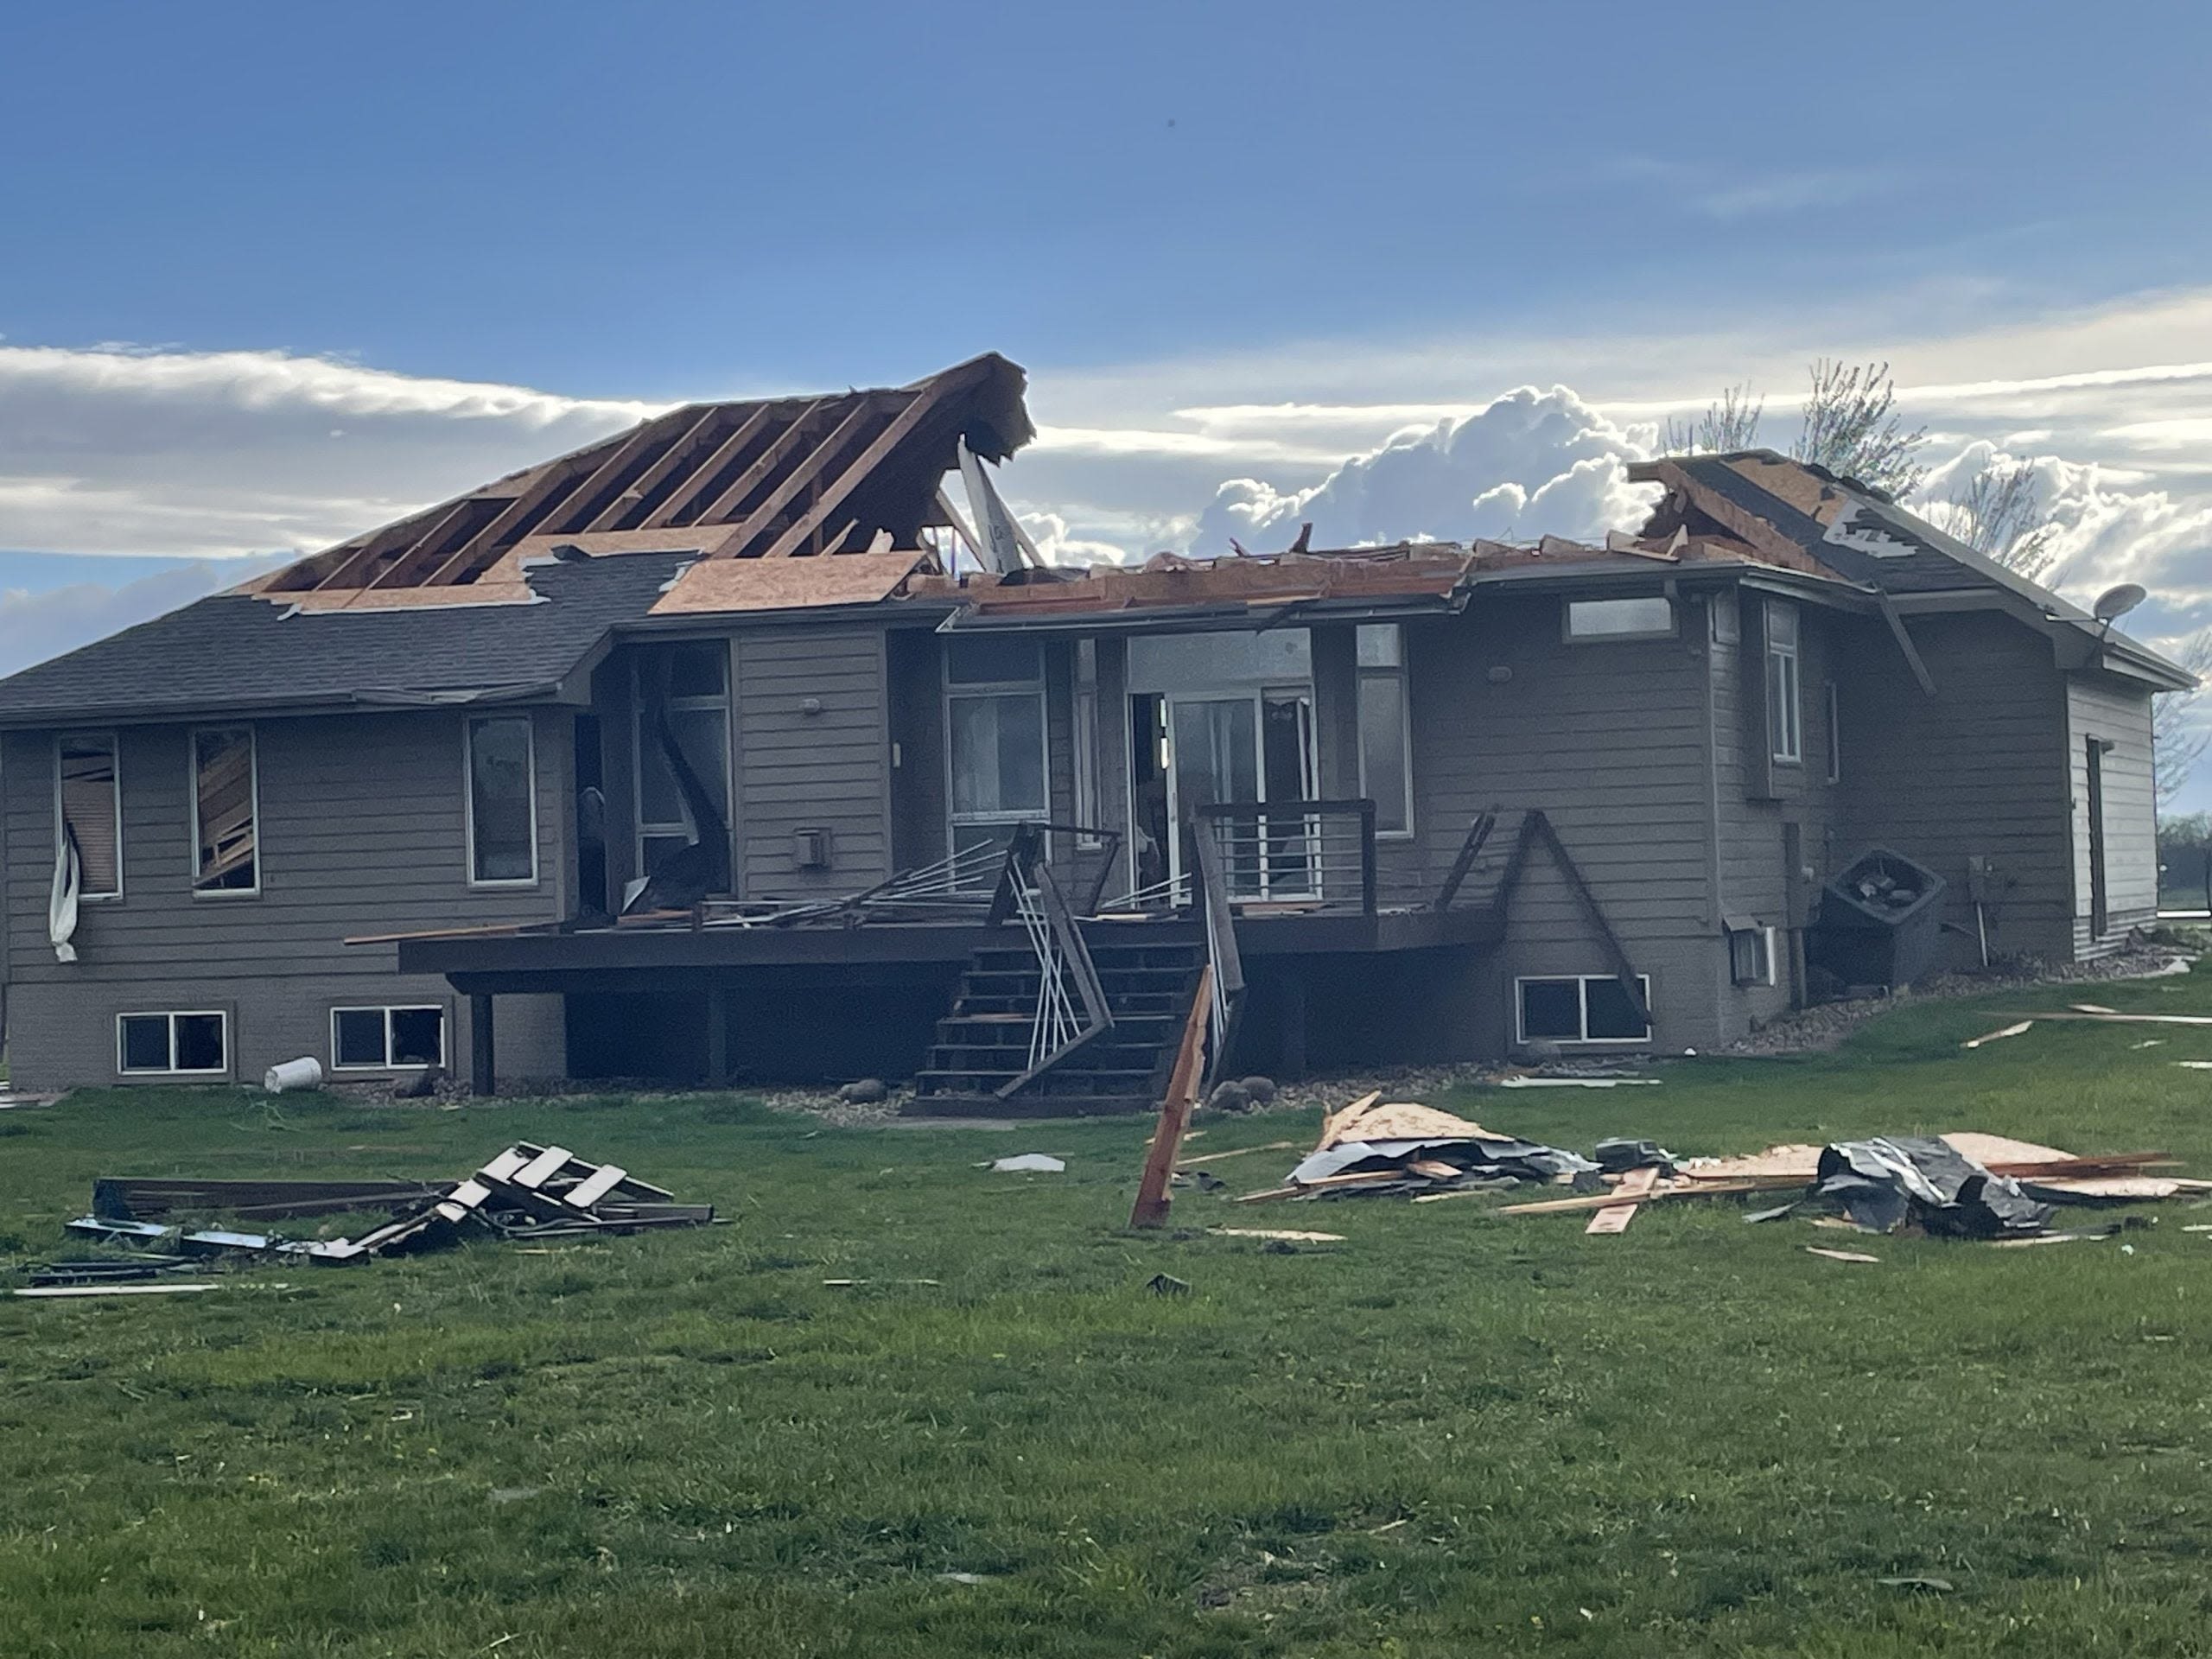 Nebraska tornado survivor recounts mayhem: 'The windows exploded and glass was flying everywhere'